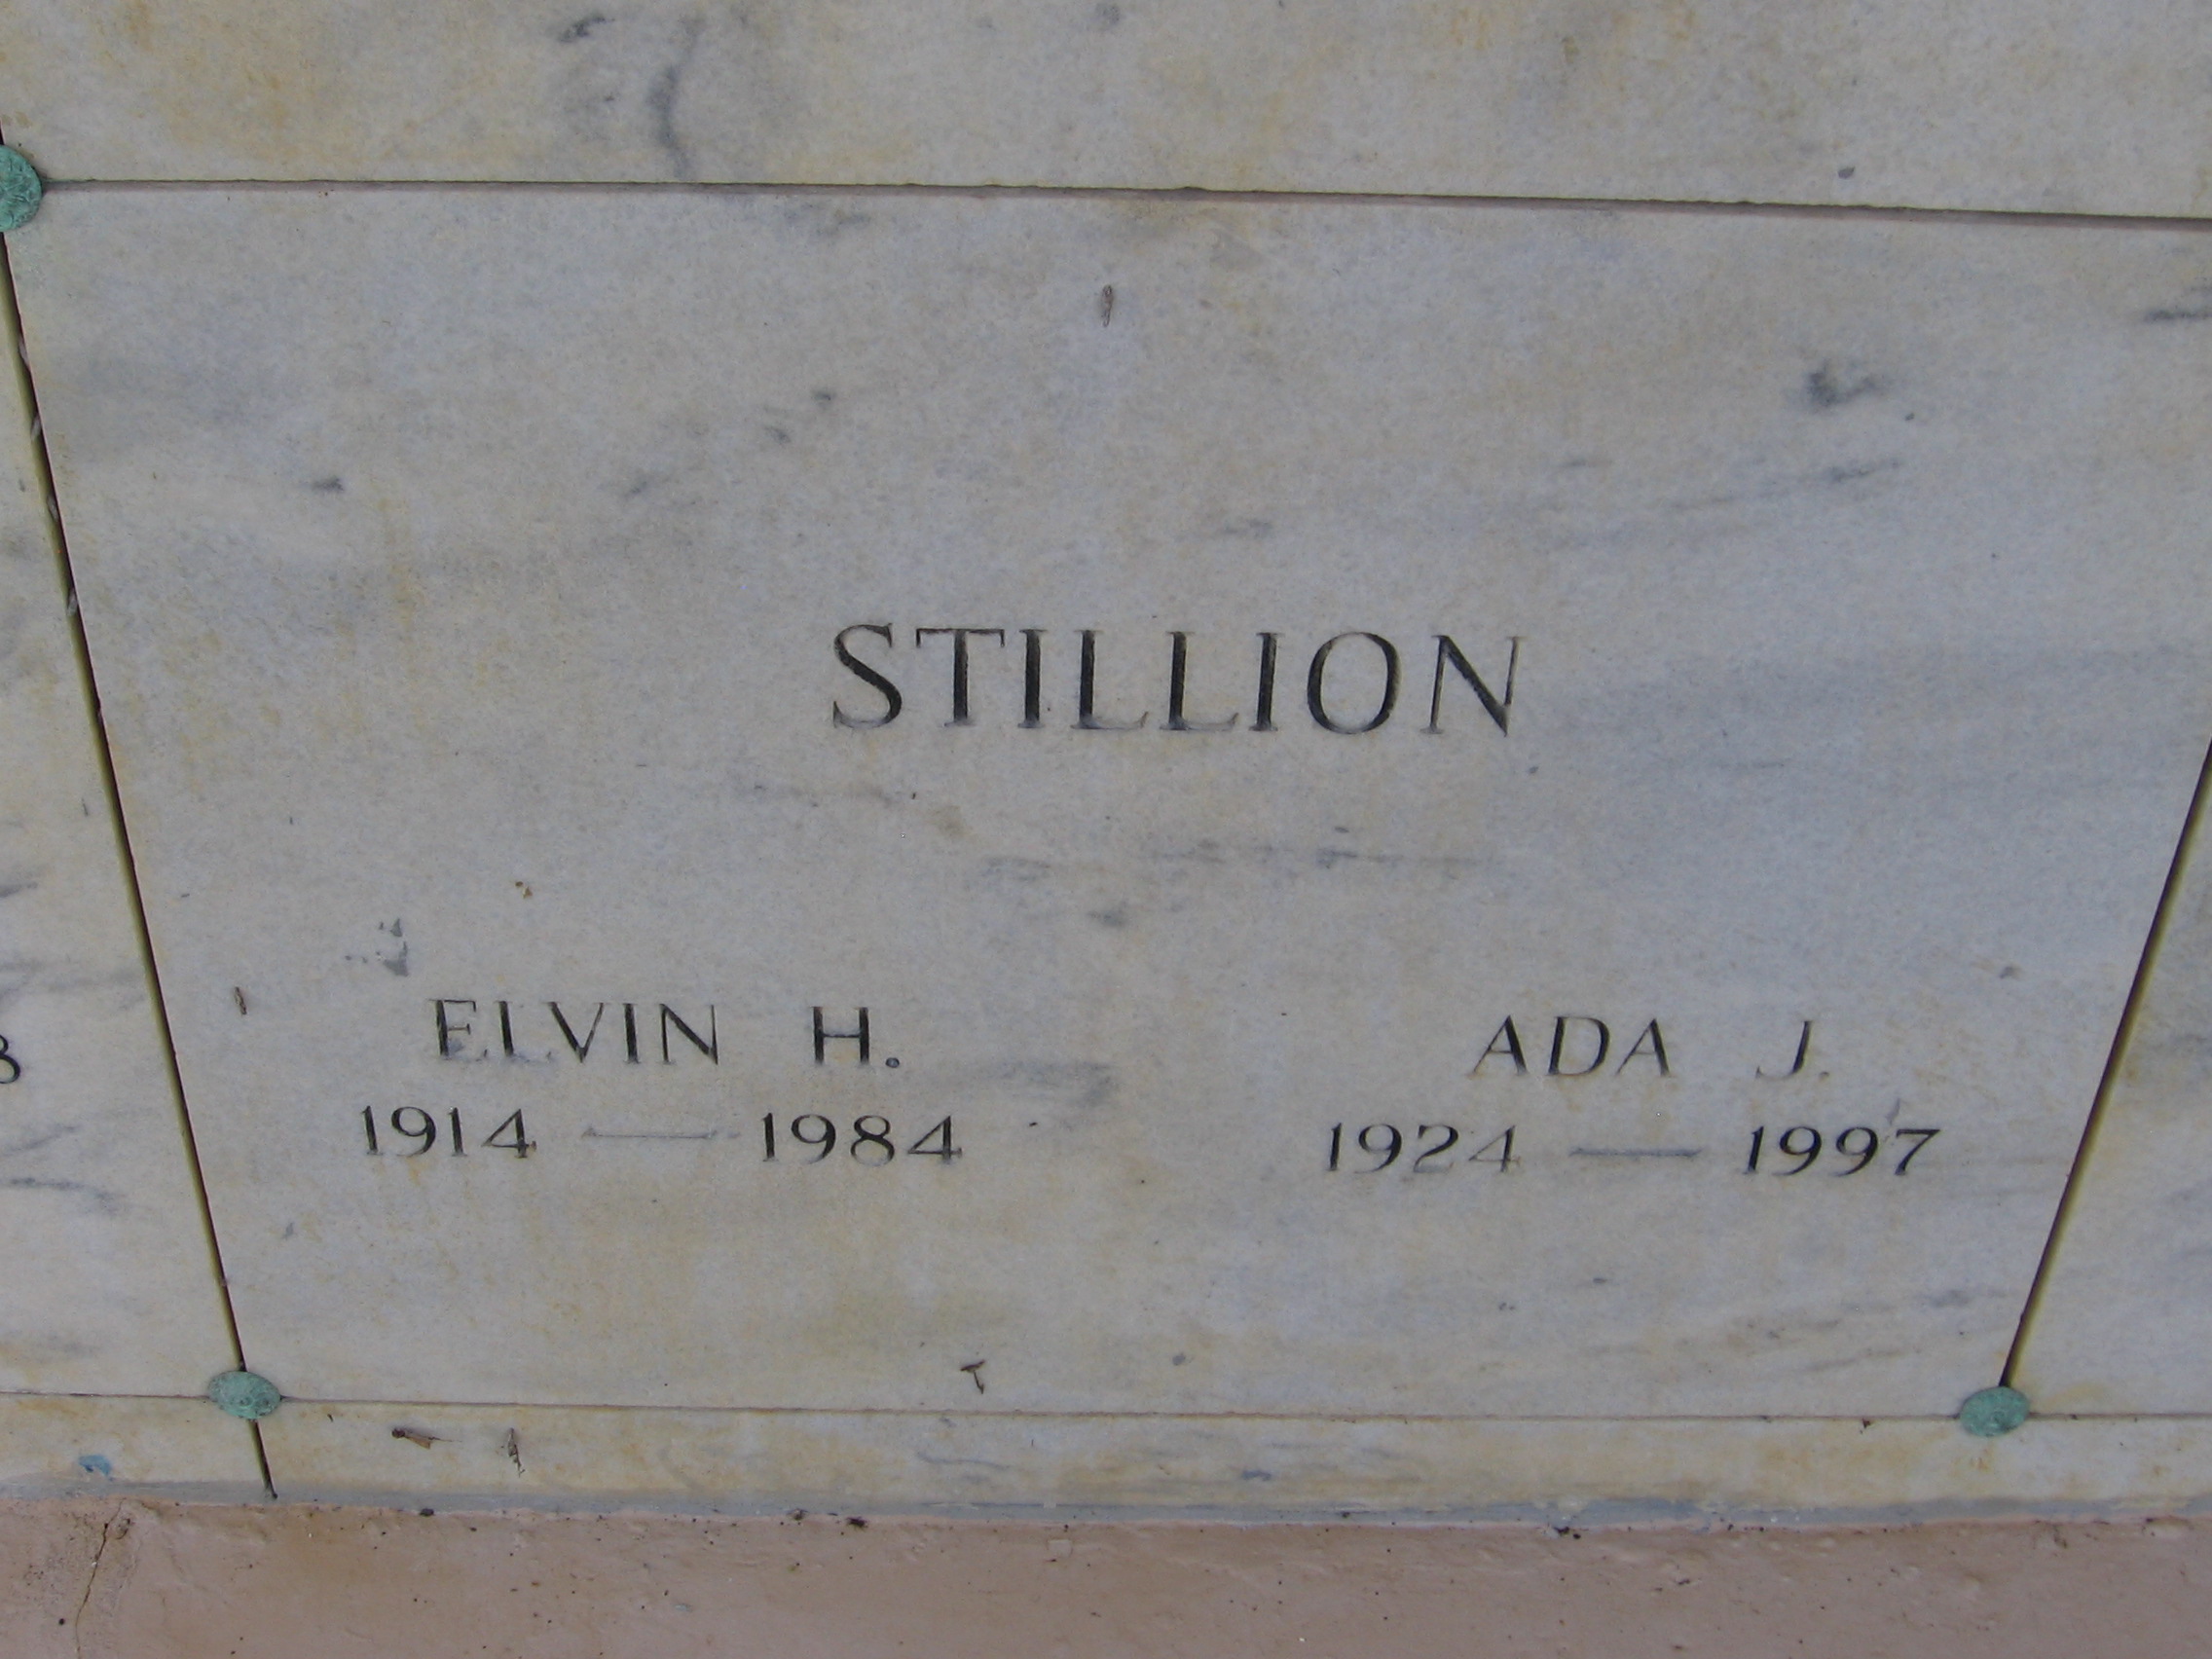 Elvin H Stillion